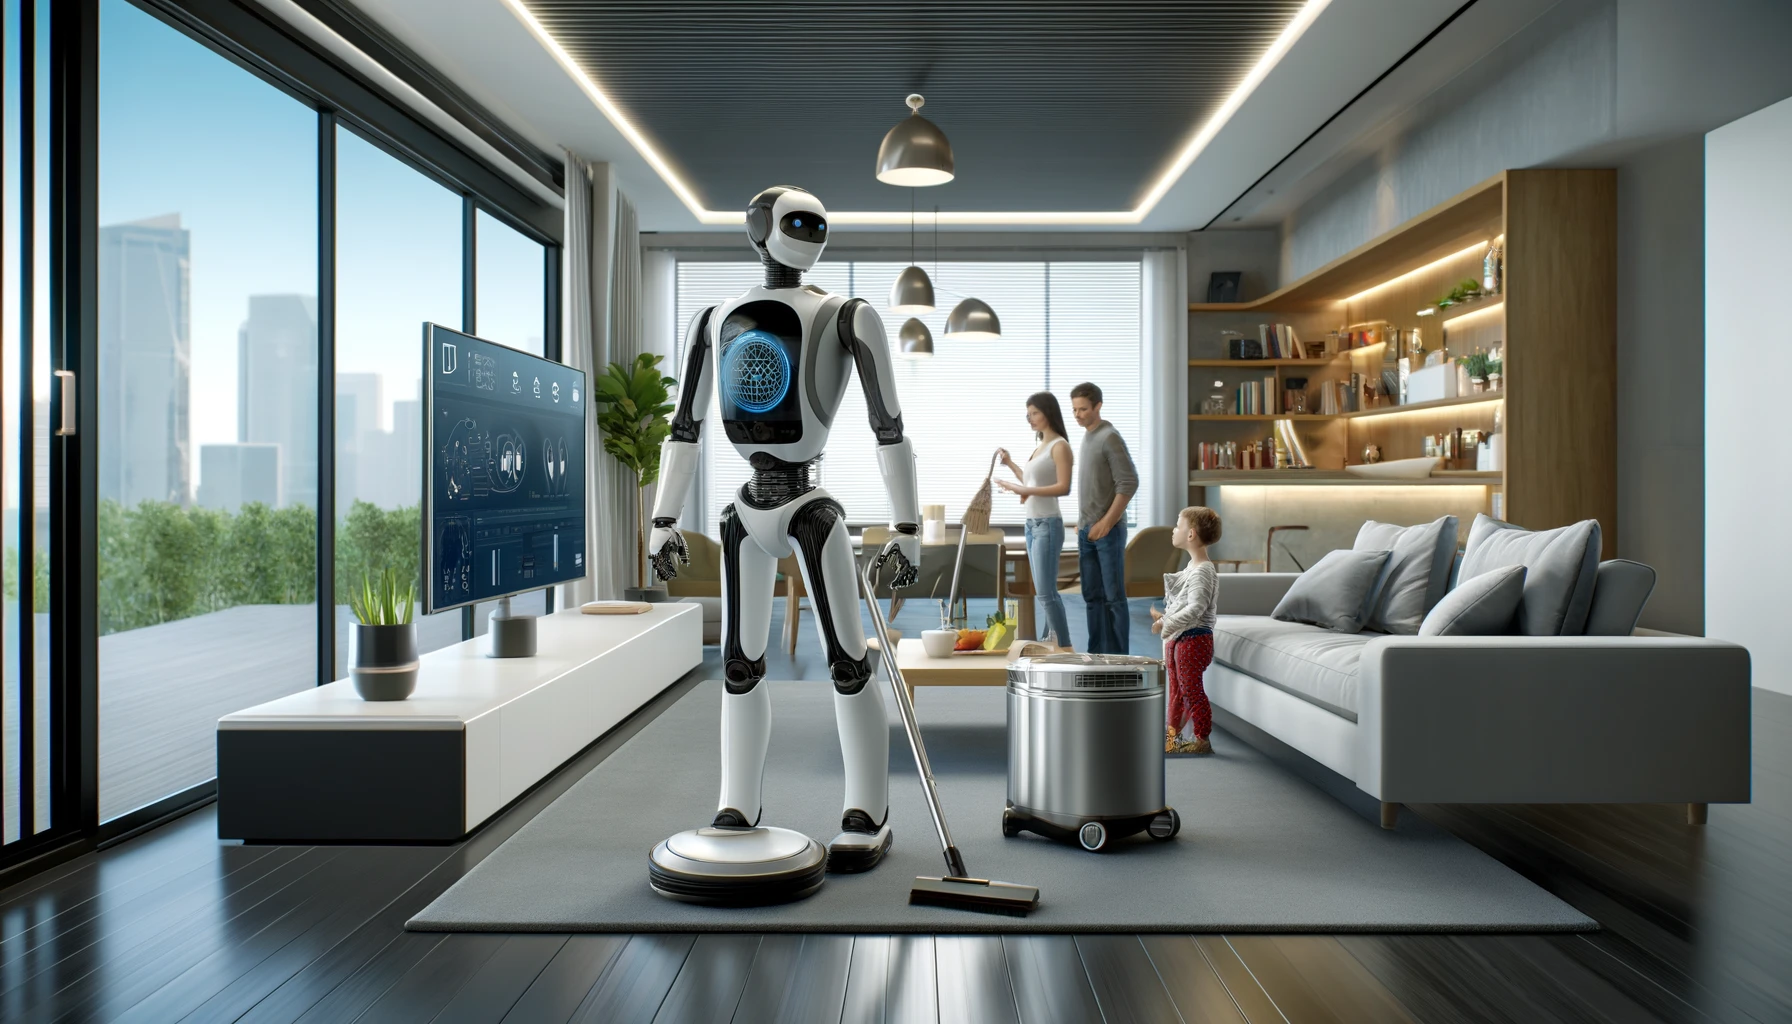 The New Robot Era of Consumer Robots